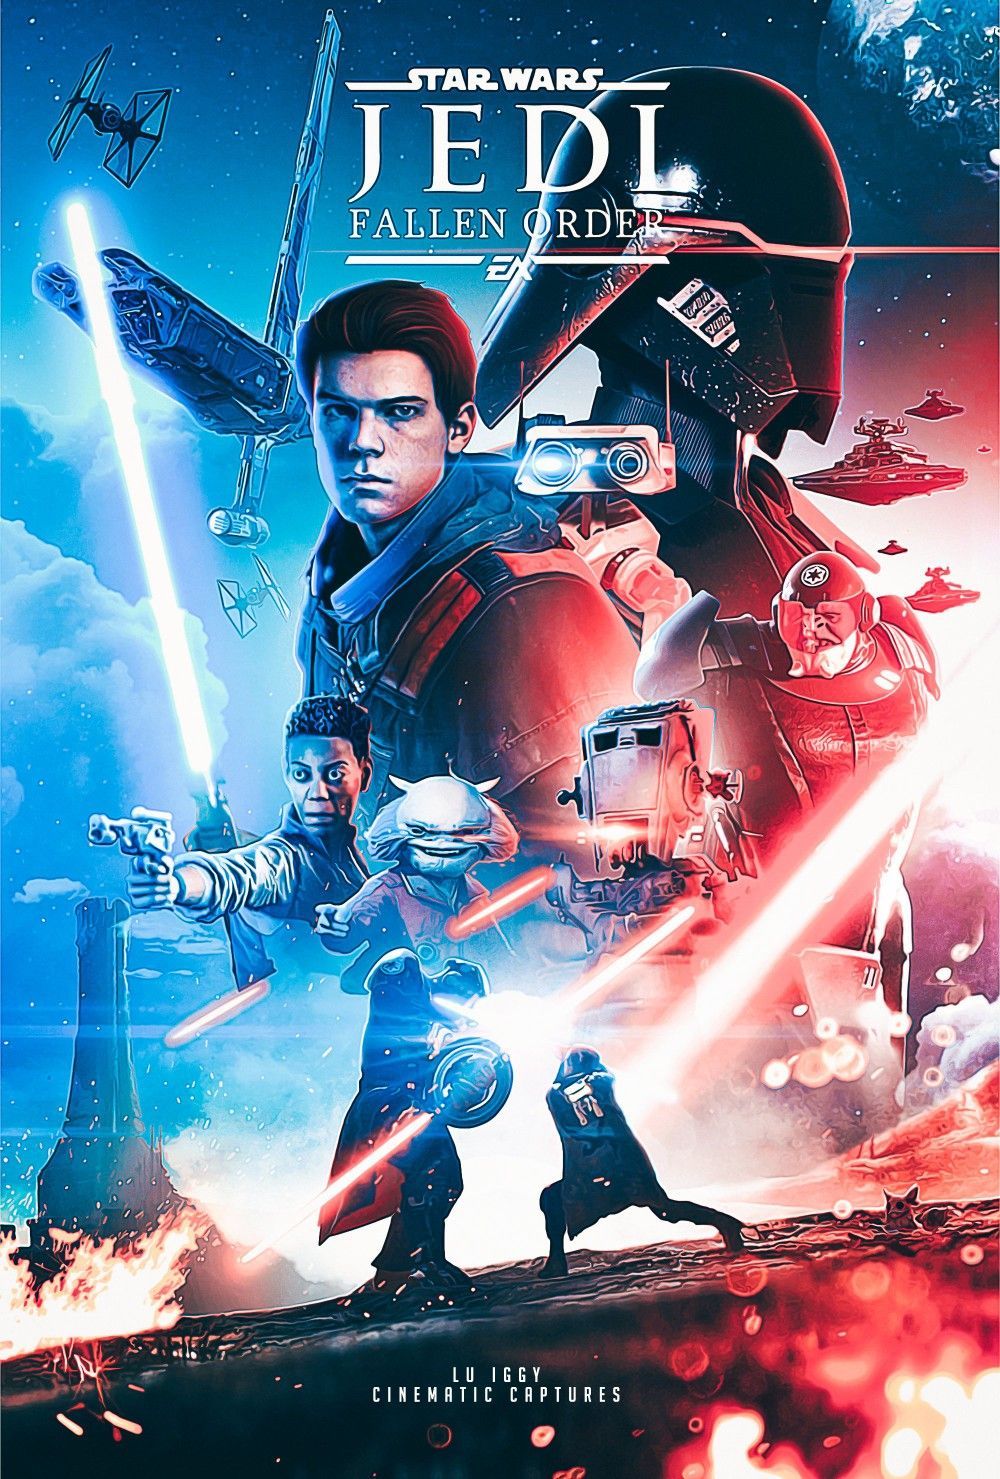 Star Wars Jedi Fallen Order. Star wars image, Star wars movies posters, Star wars jedi